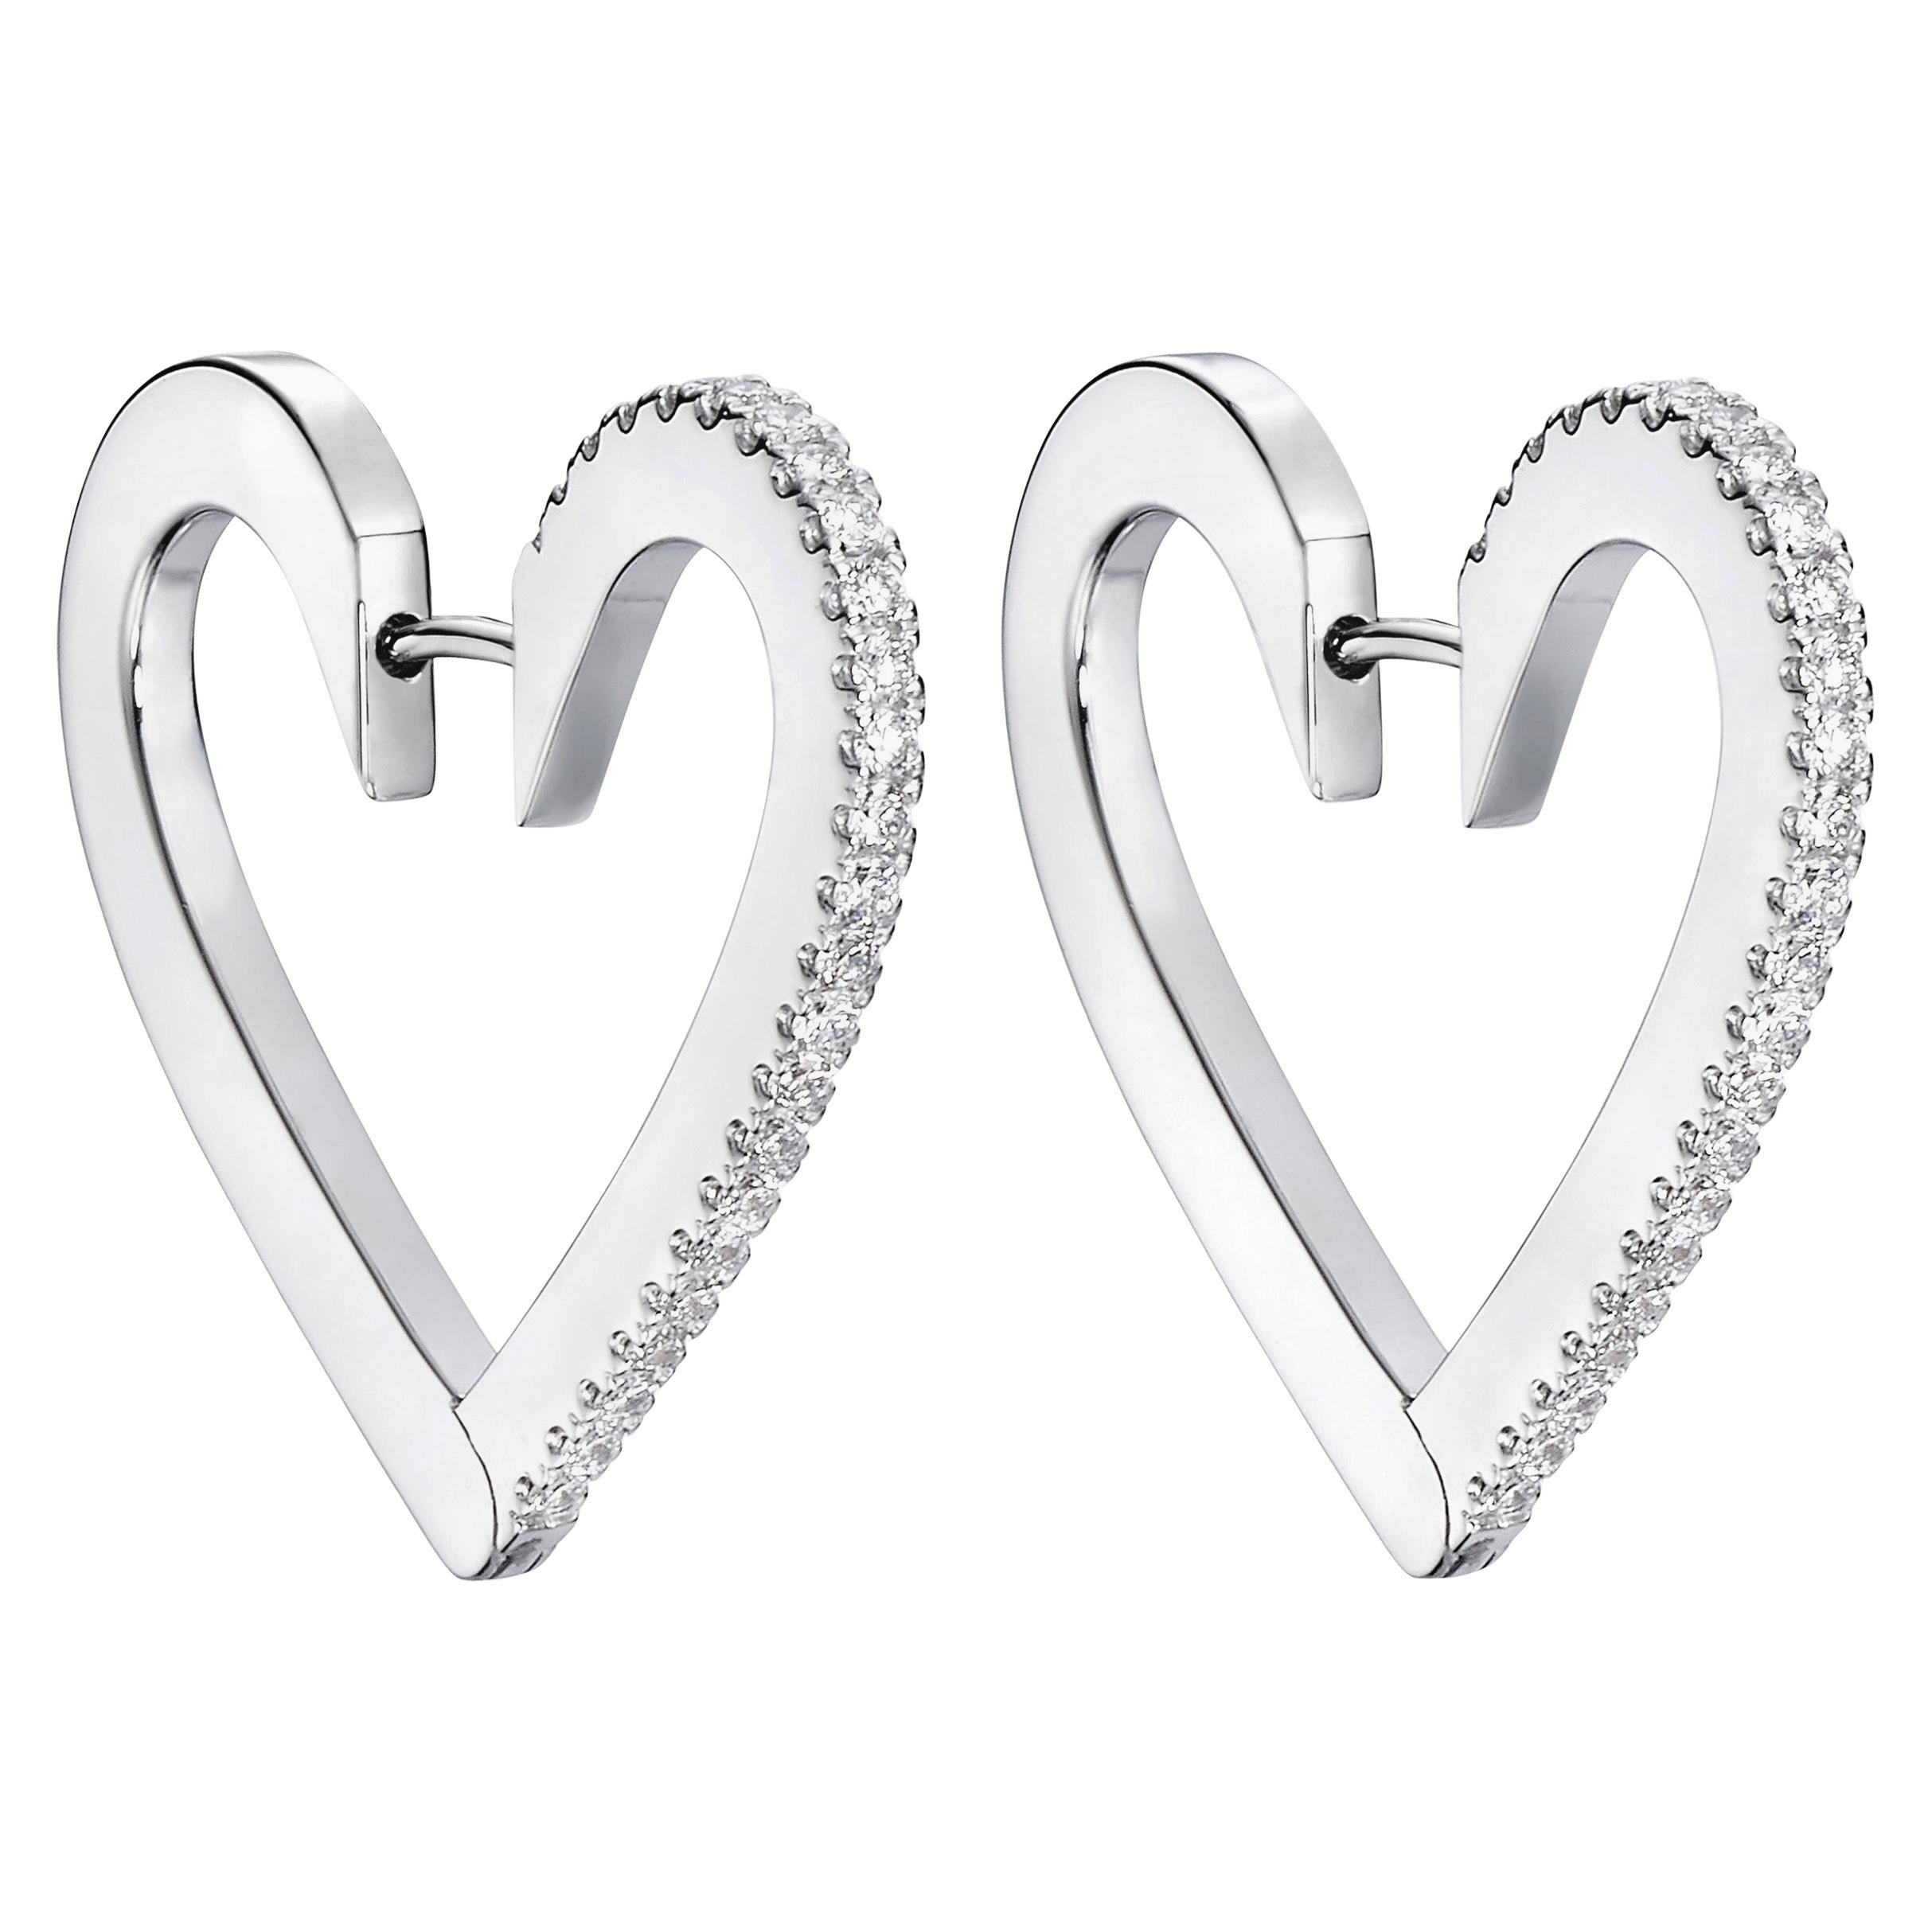 Heart Shaped Hoop Earrings, 18 Karat White Gold and White Diamonds, Medium